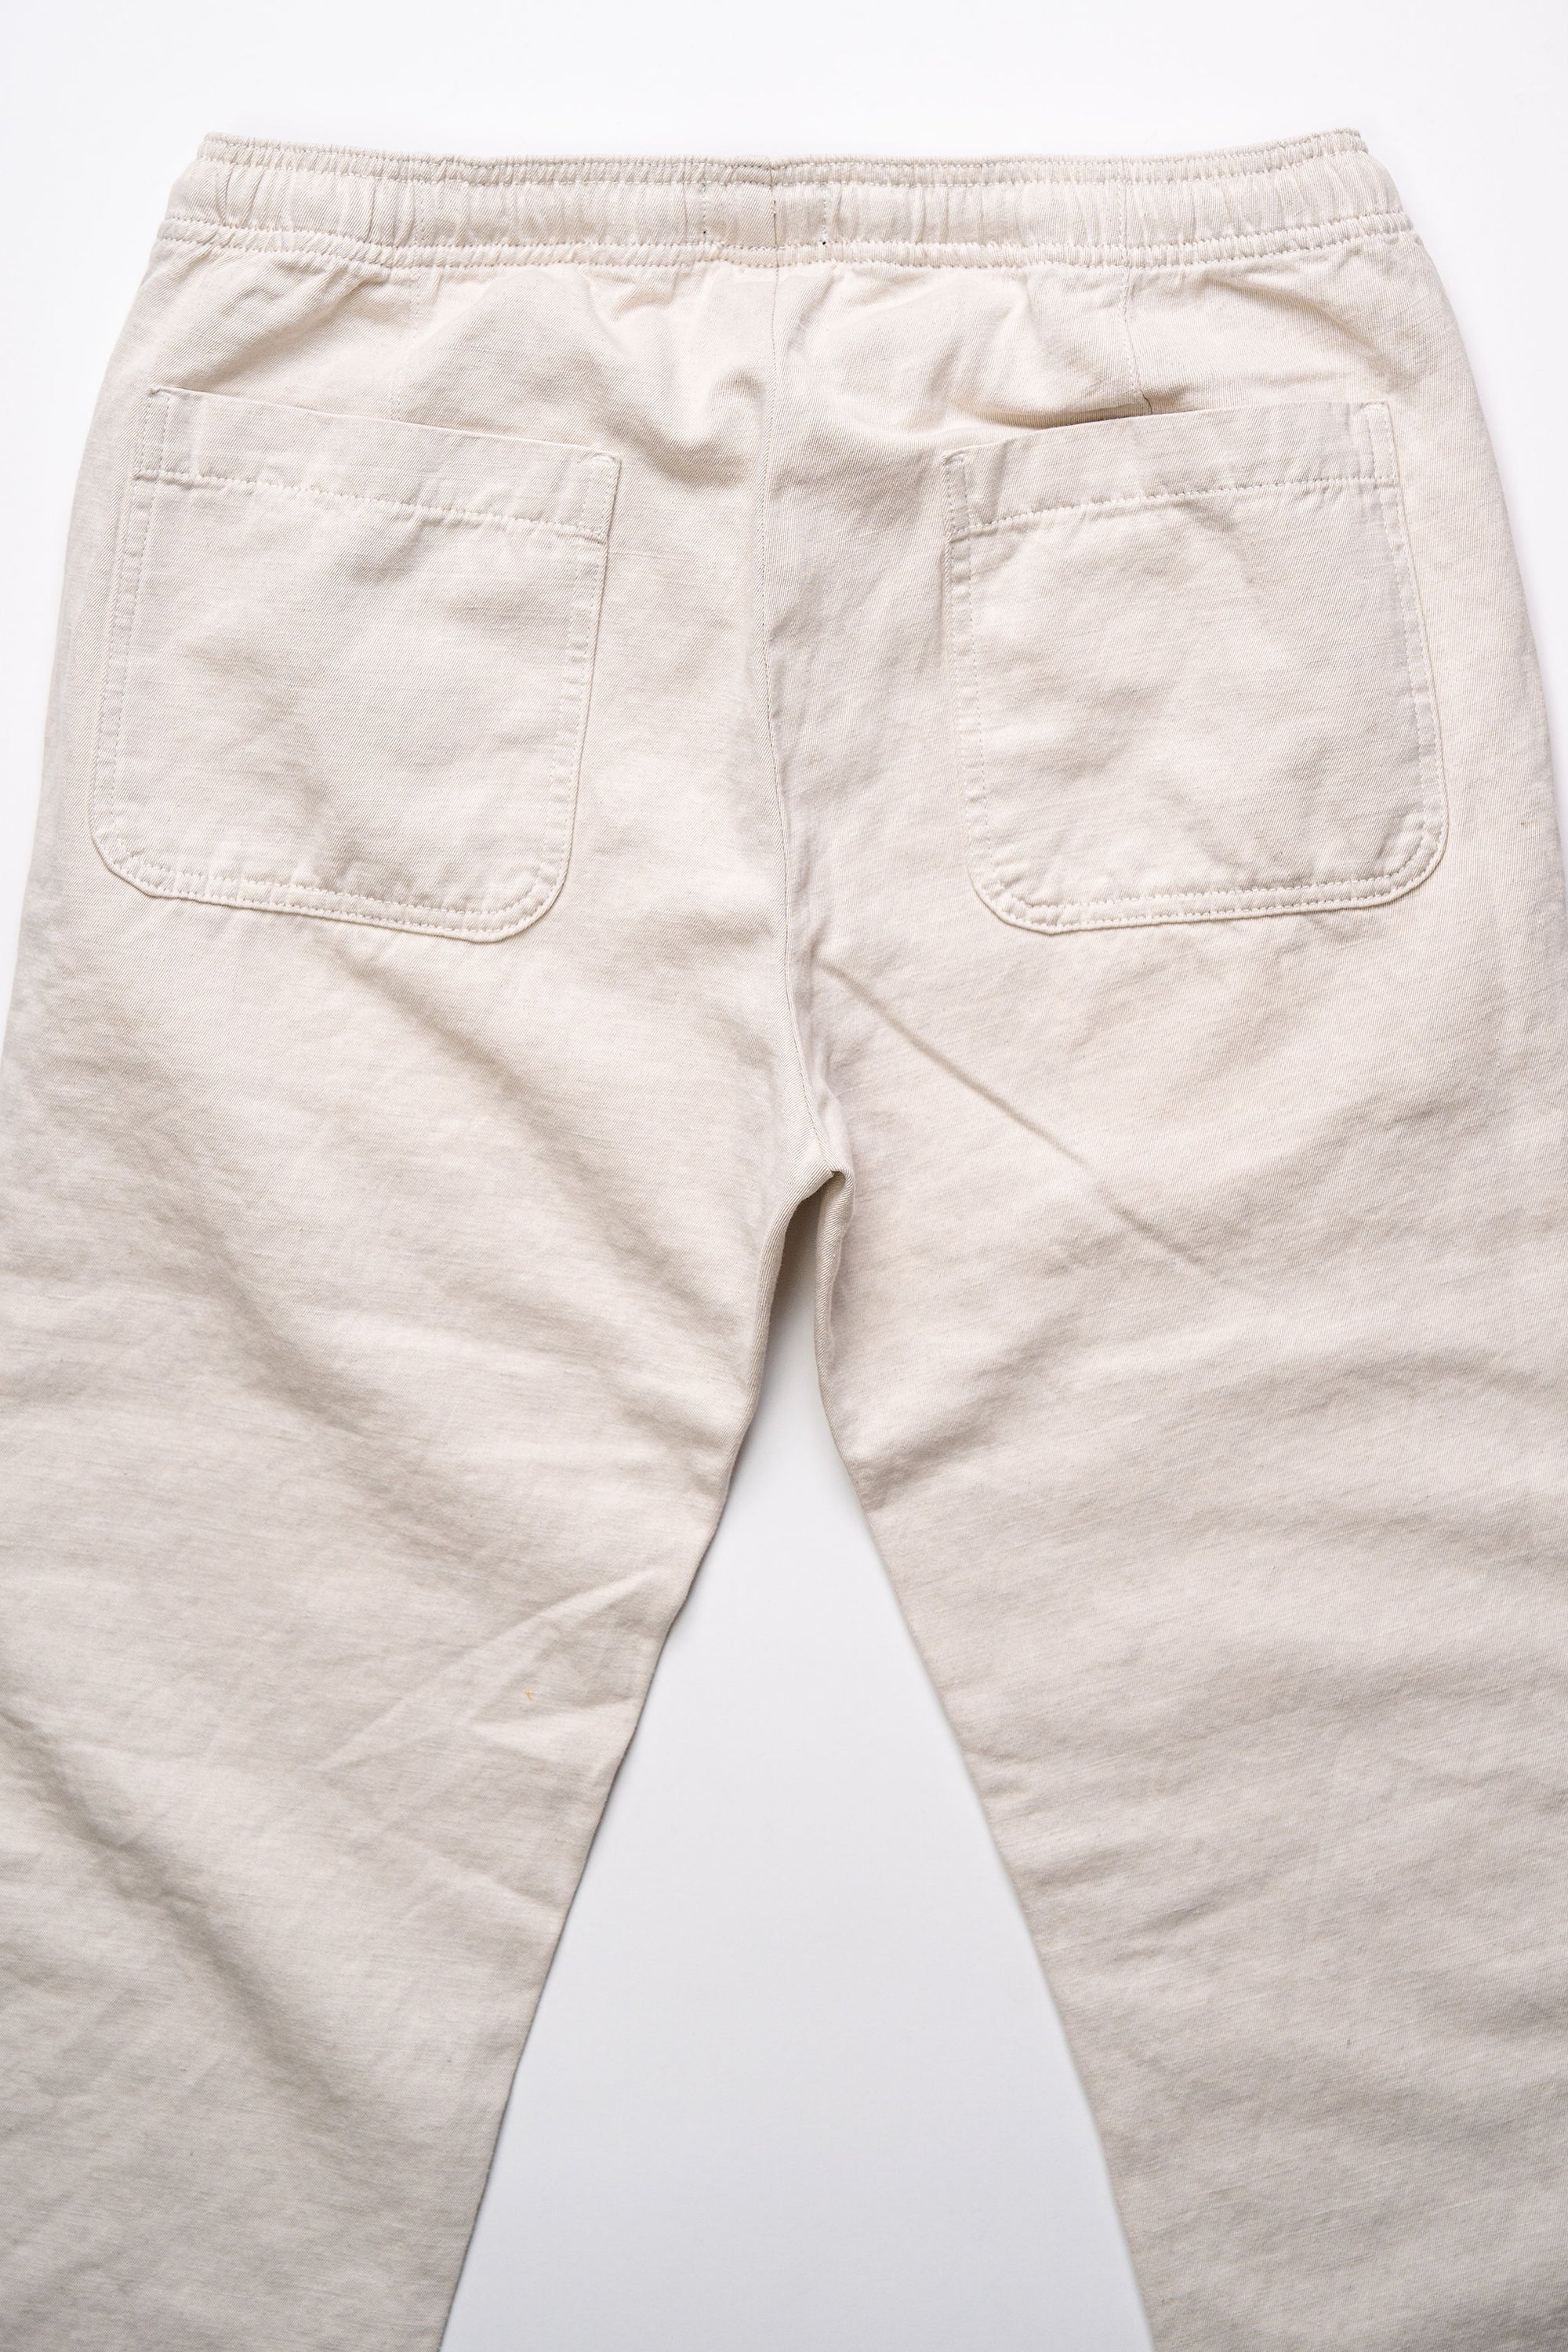 C.O.F. Drawstring Pants - Light Cotton Linen Ecru